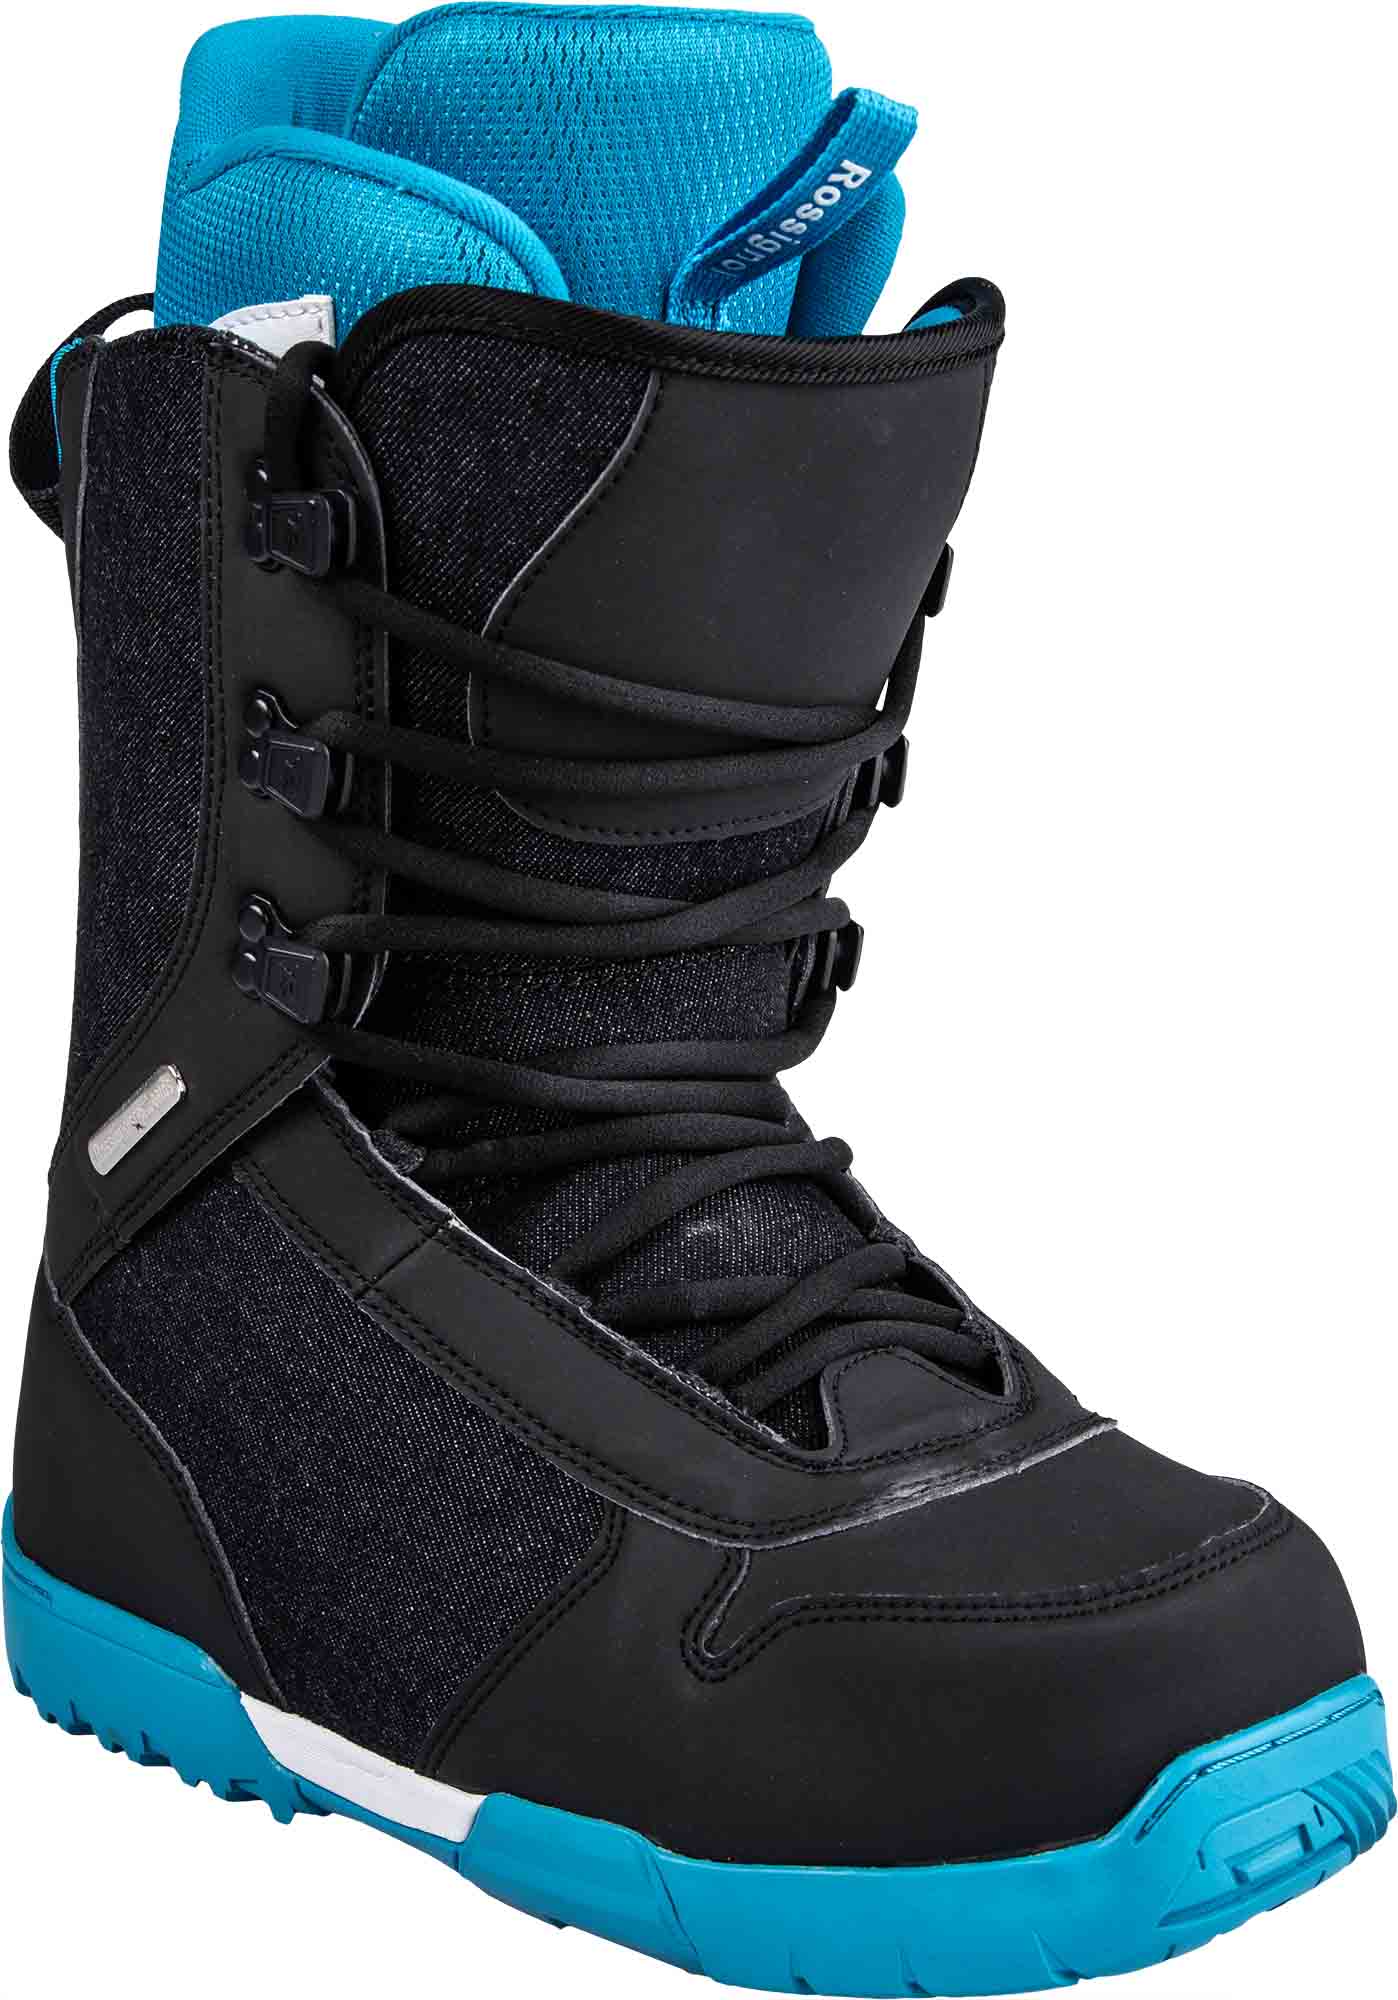 Women’s snowboard boots